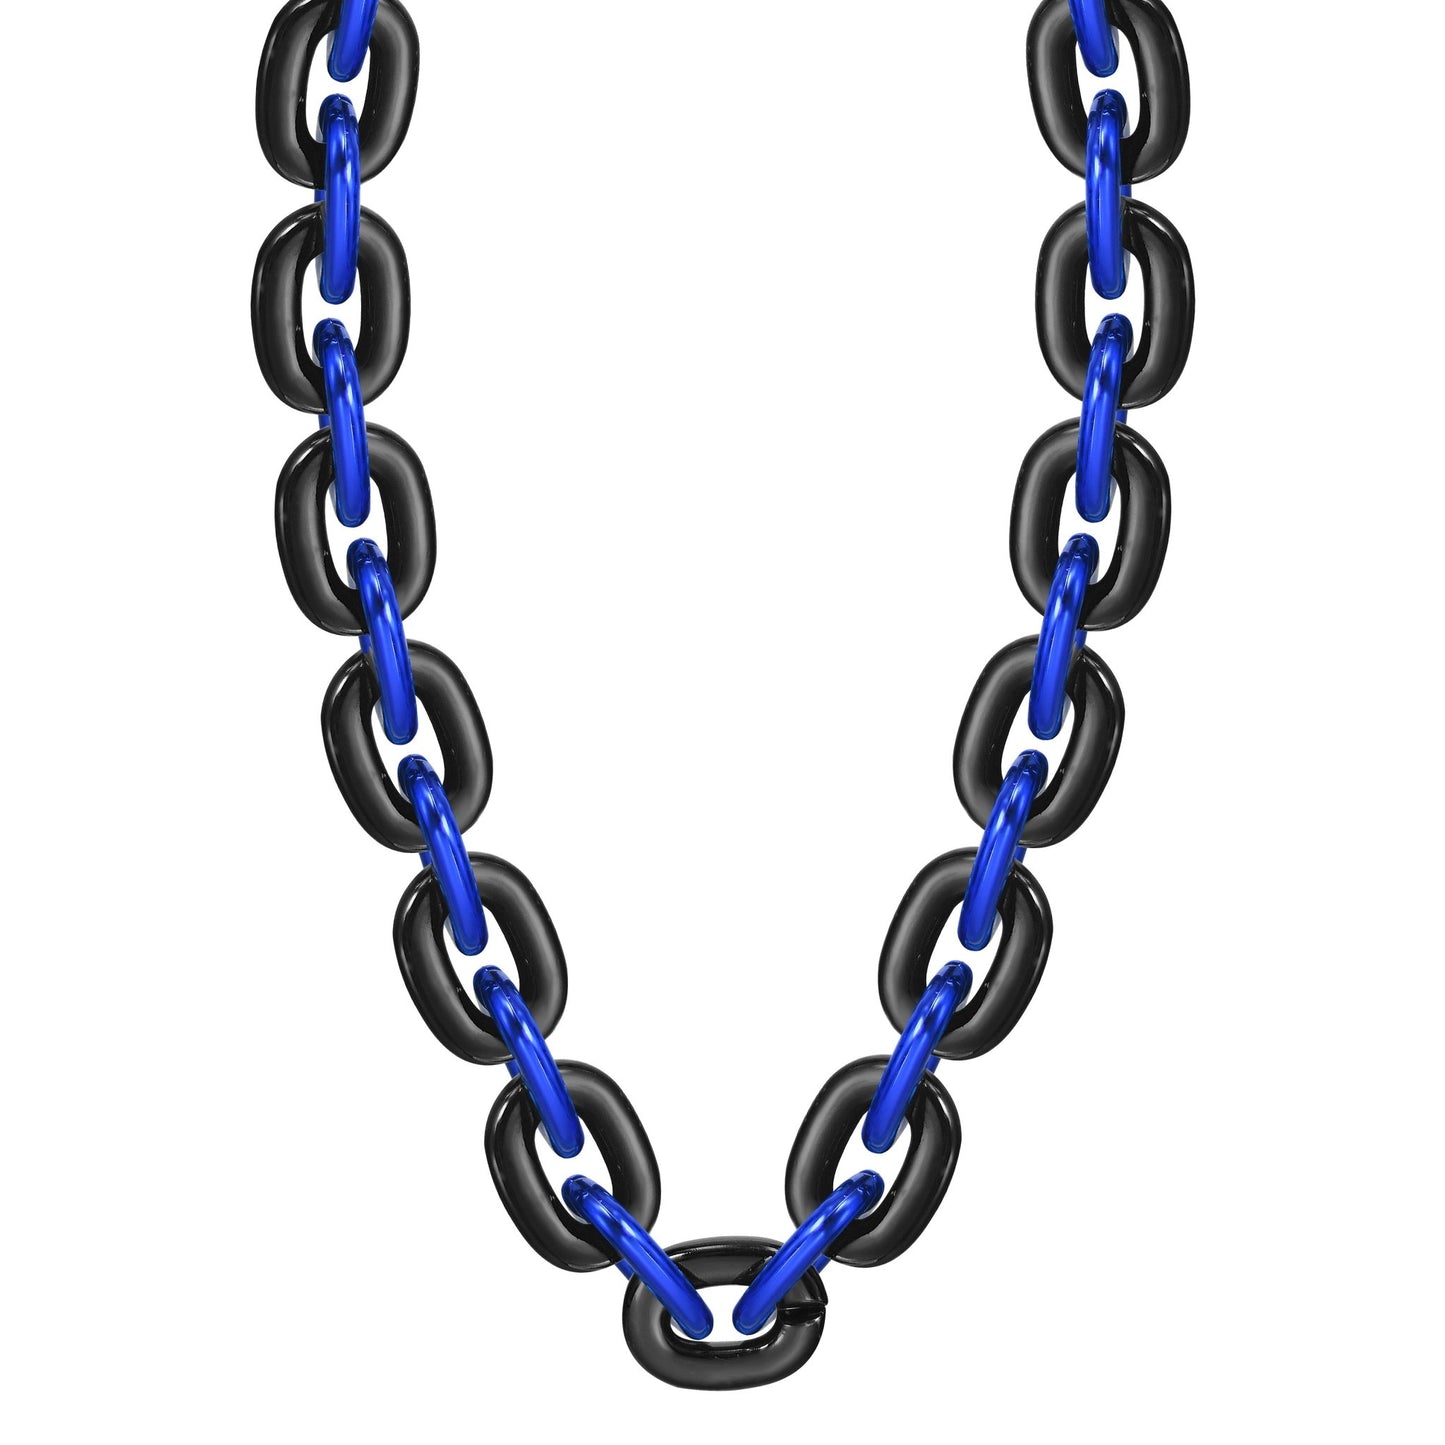 Jumbo Fan Chain Necklace - Gamedays Gear - Black / Royal Blue